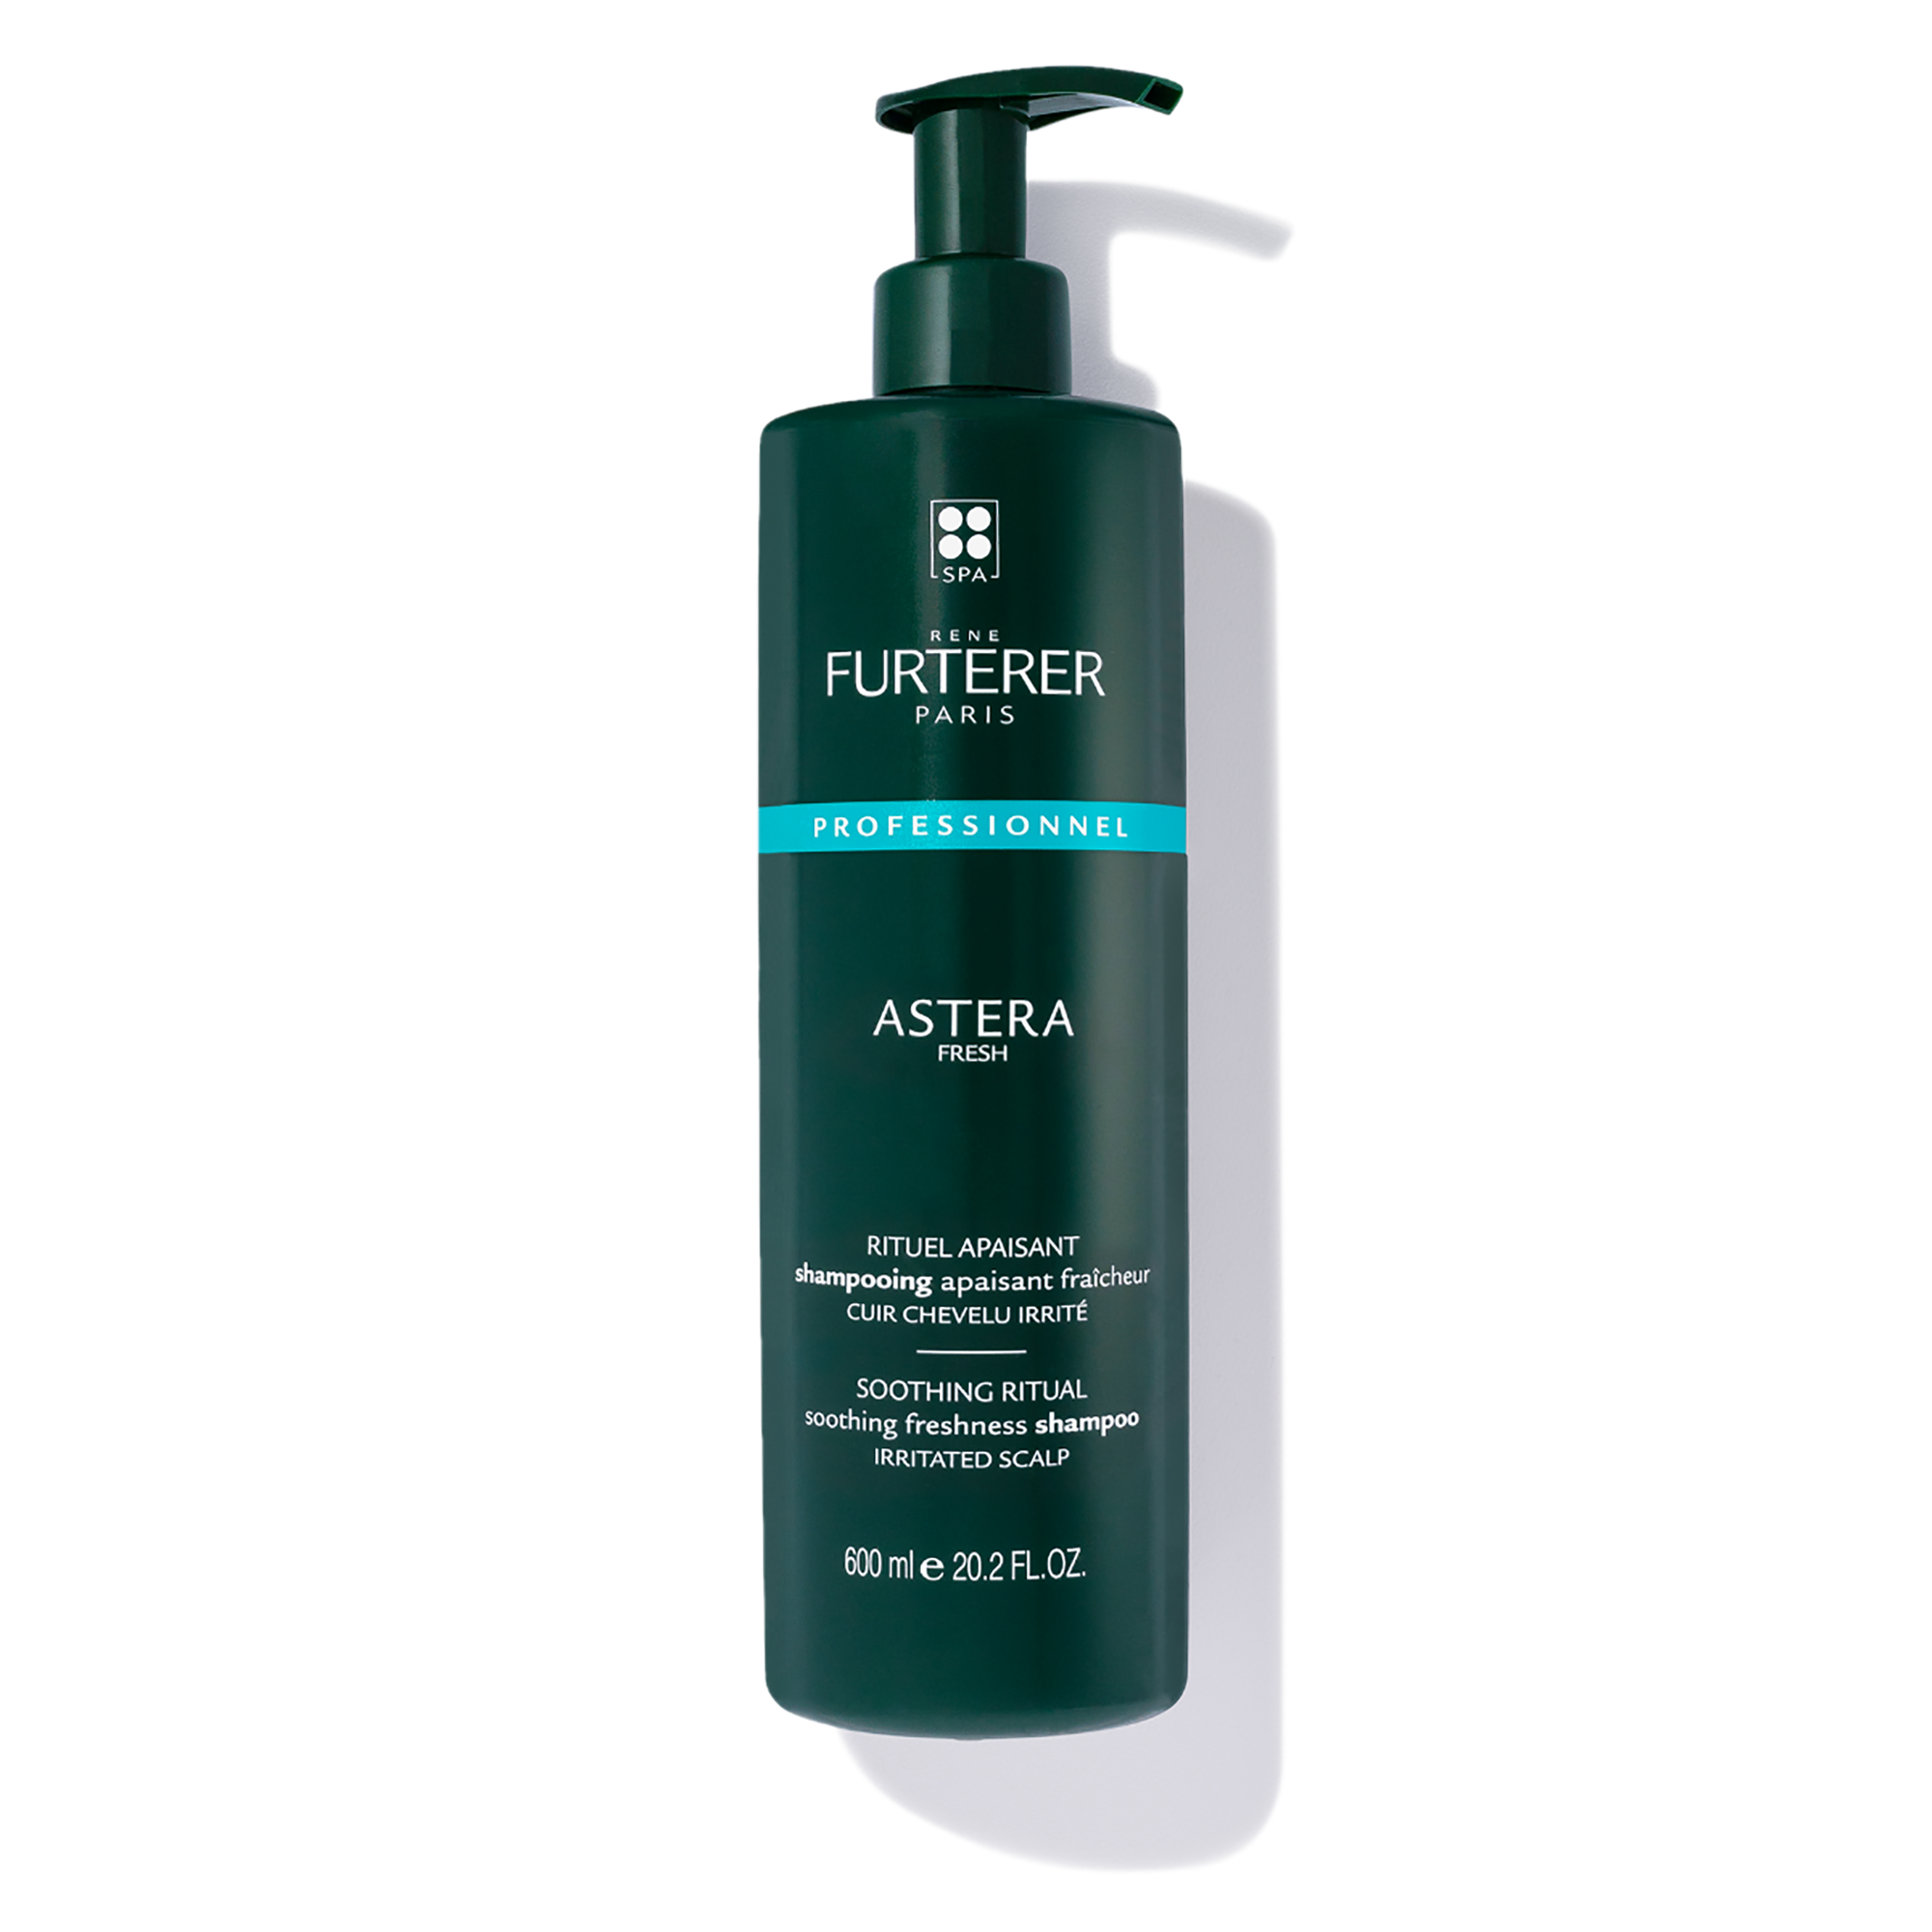 Rene Furterer ASTERA FRESH Soothing Freshness Shampoo / 20.2OZ